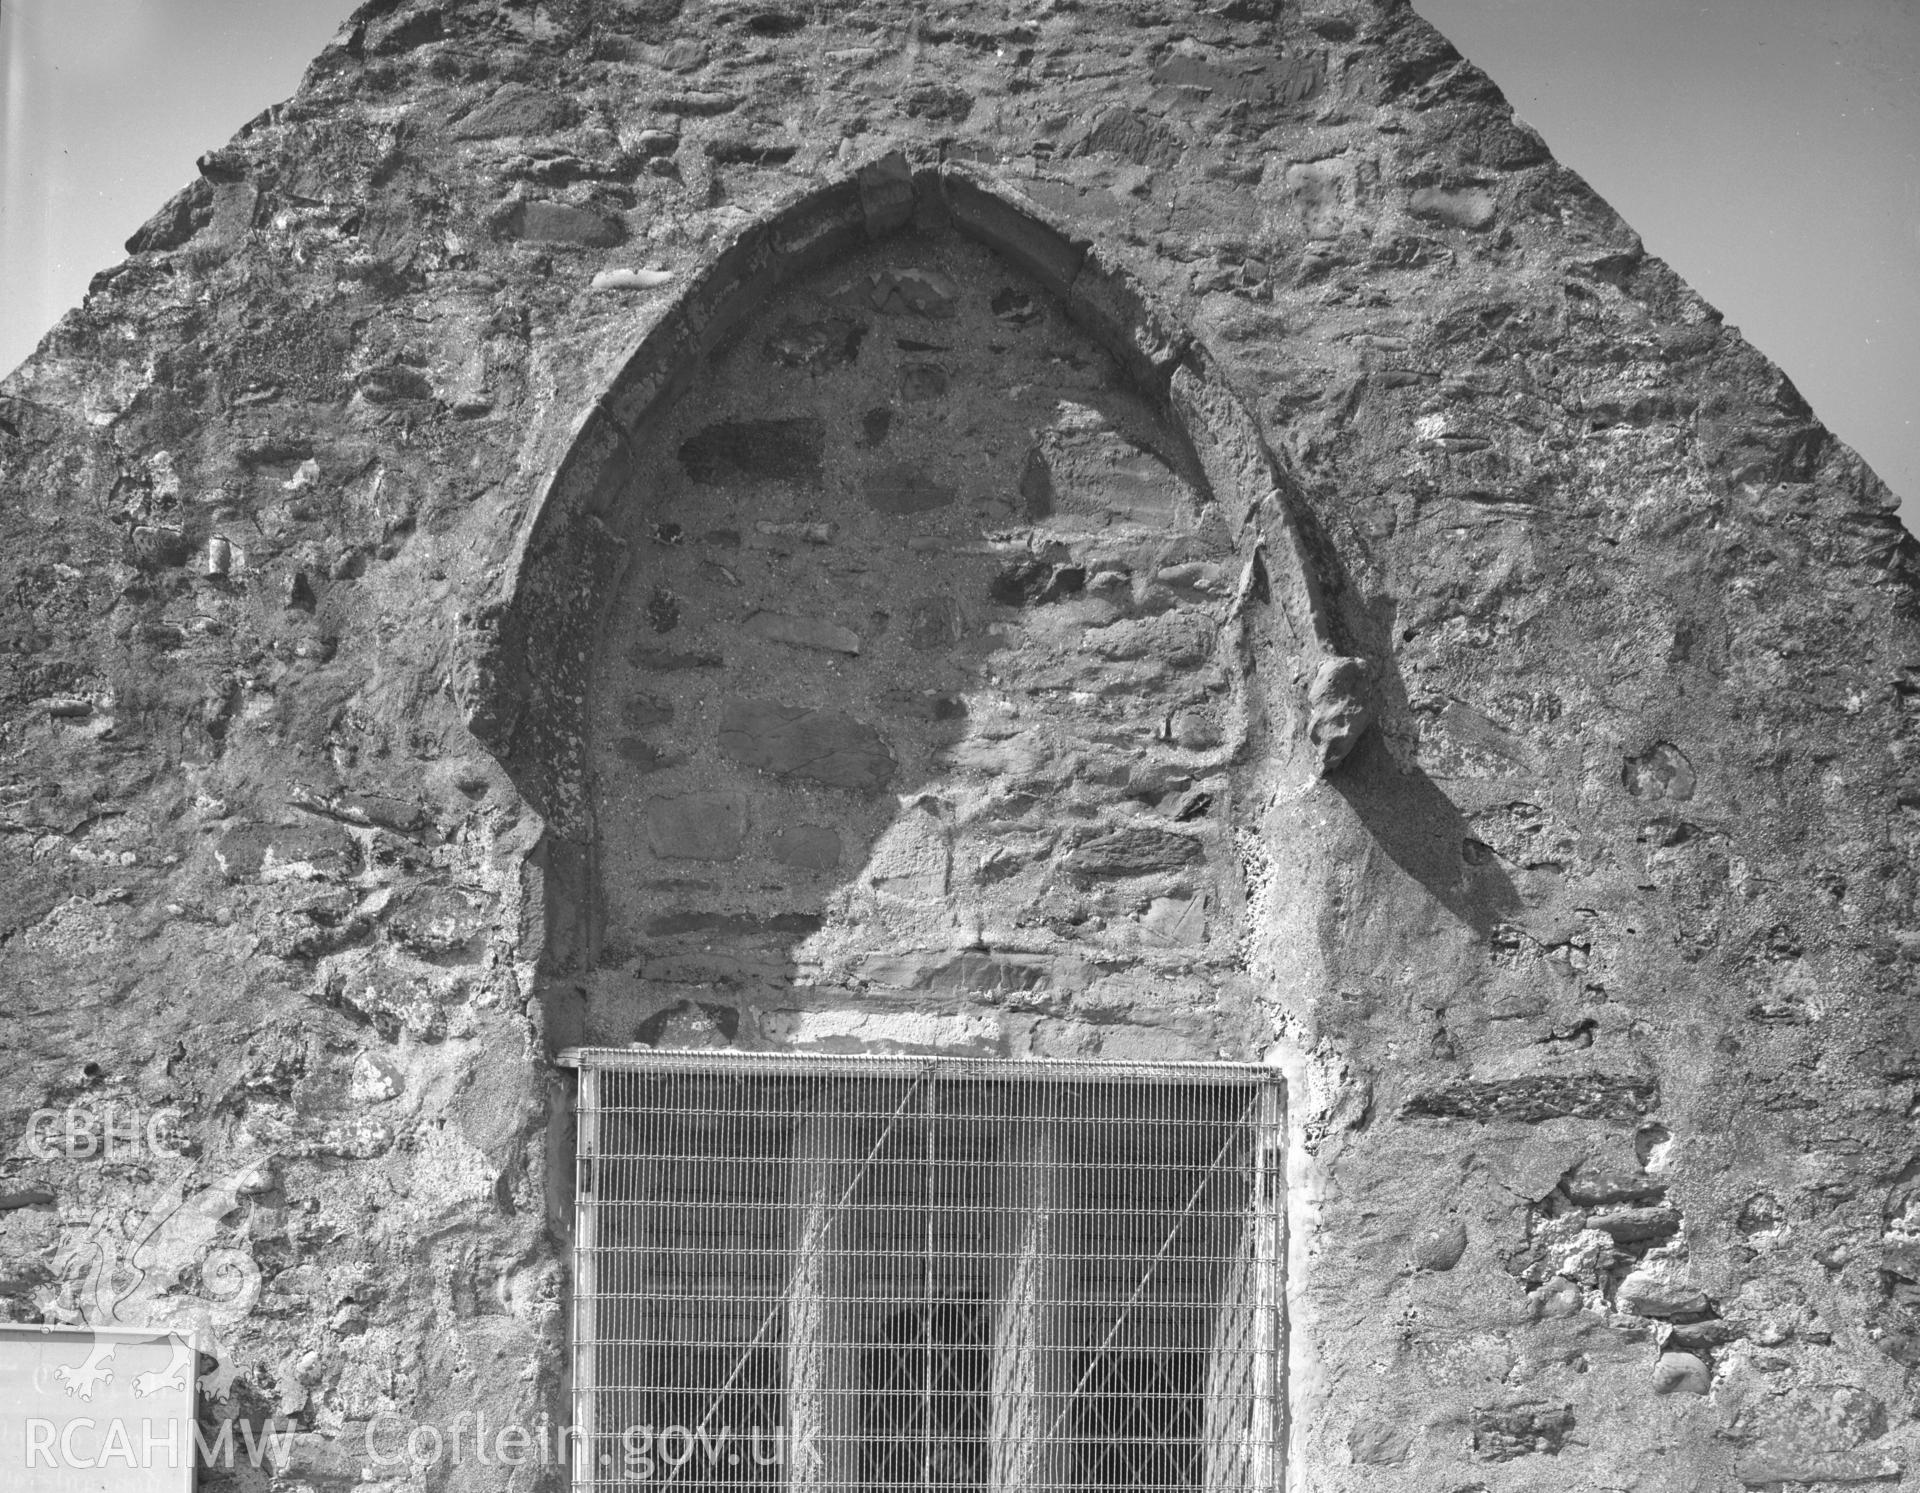 Black and white acetate negative showing detail at Llandanwg Church.